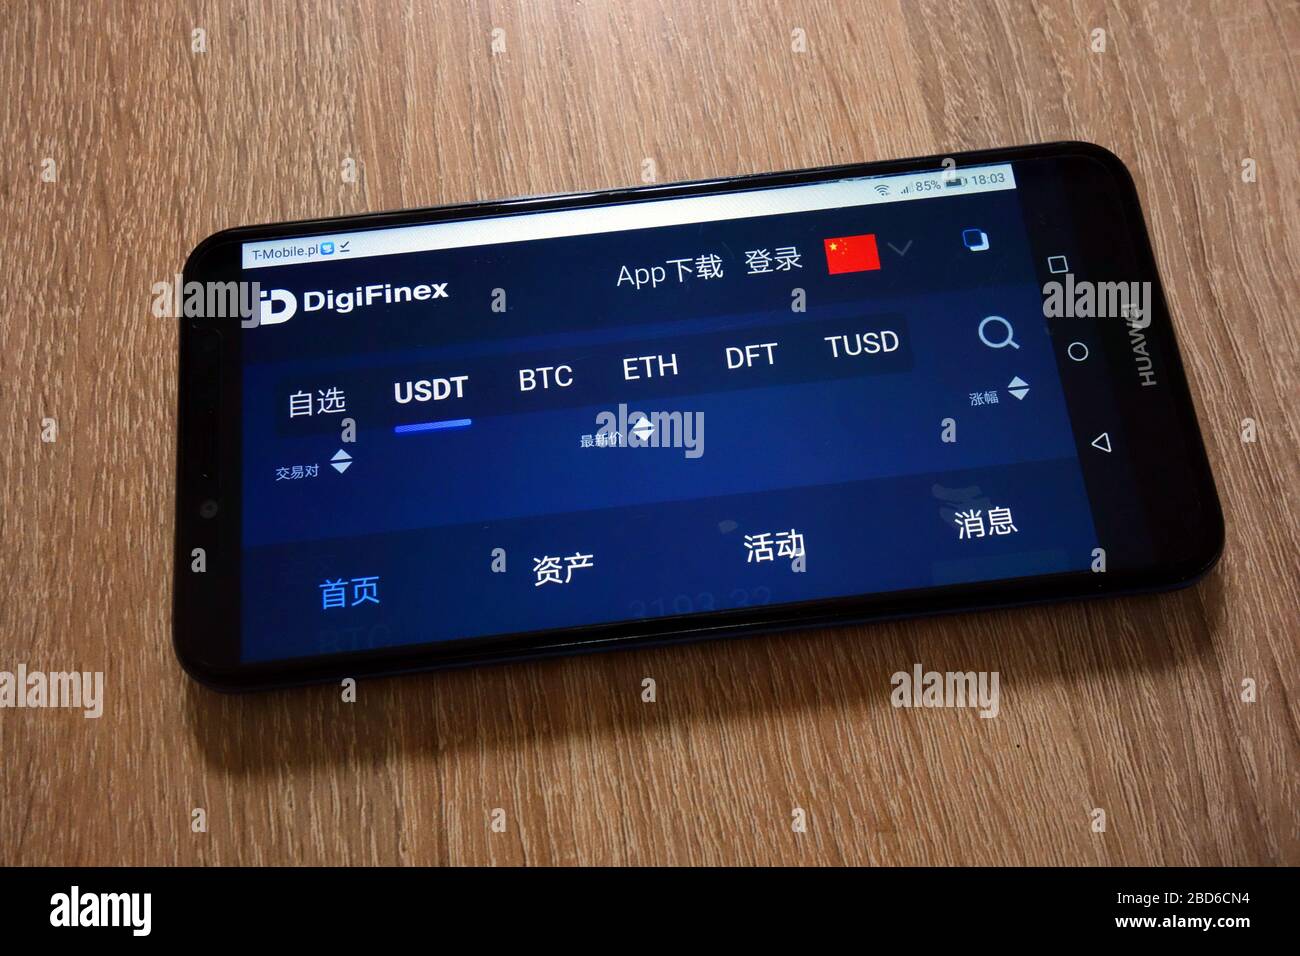 DigiFinex cryptocurrency exchange website displayed on smartphone Stock Photo